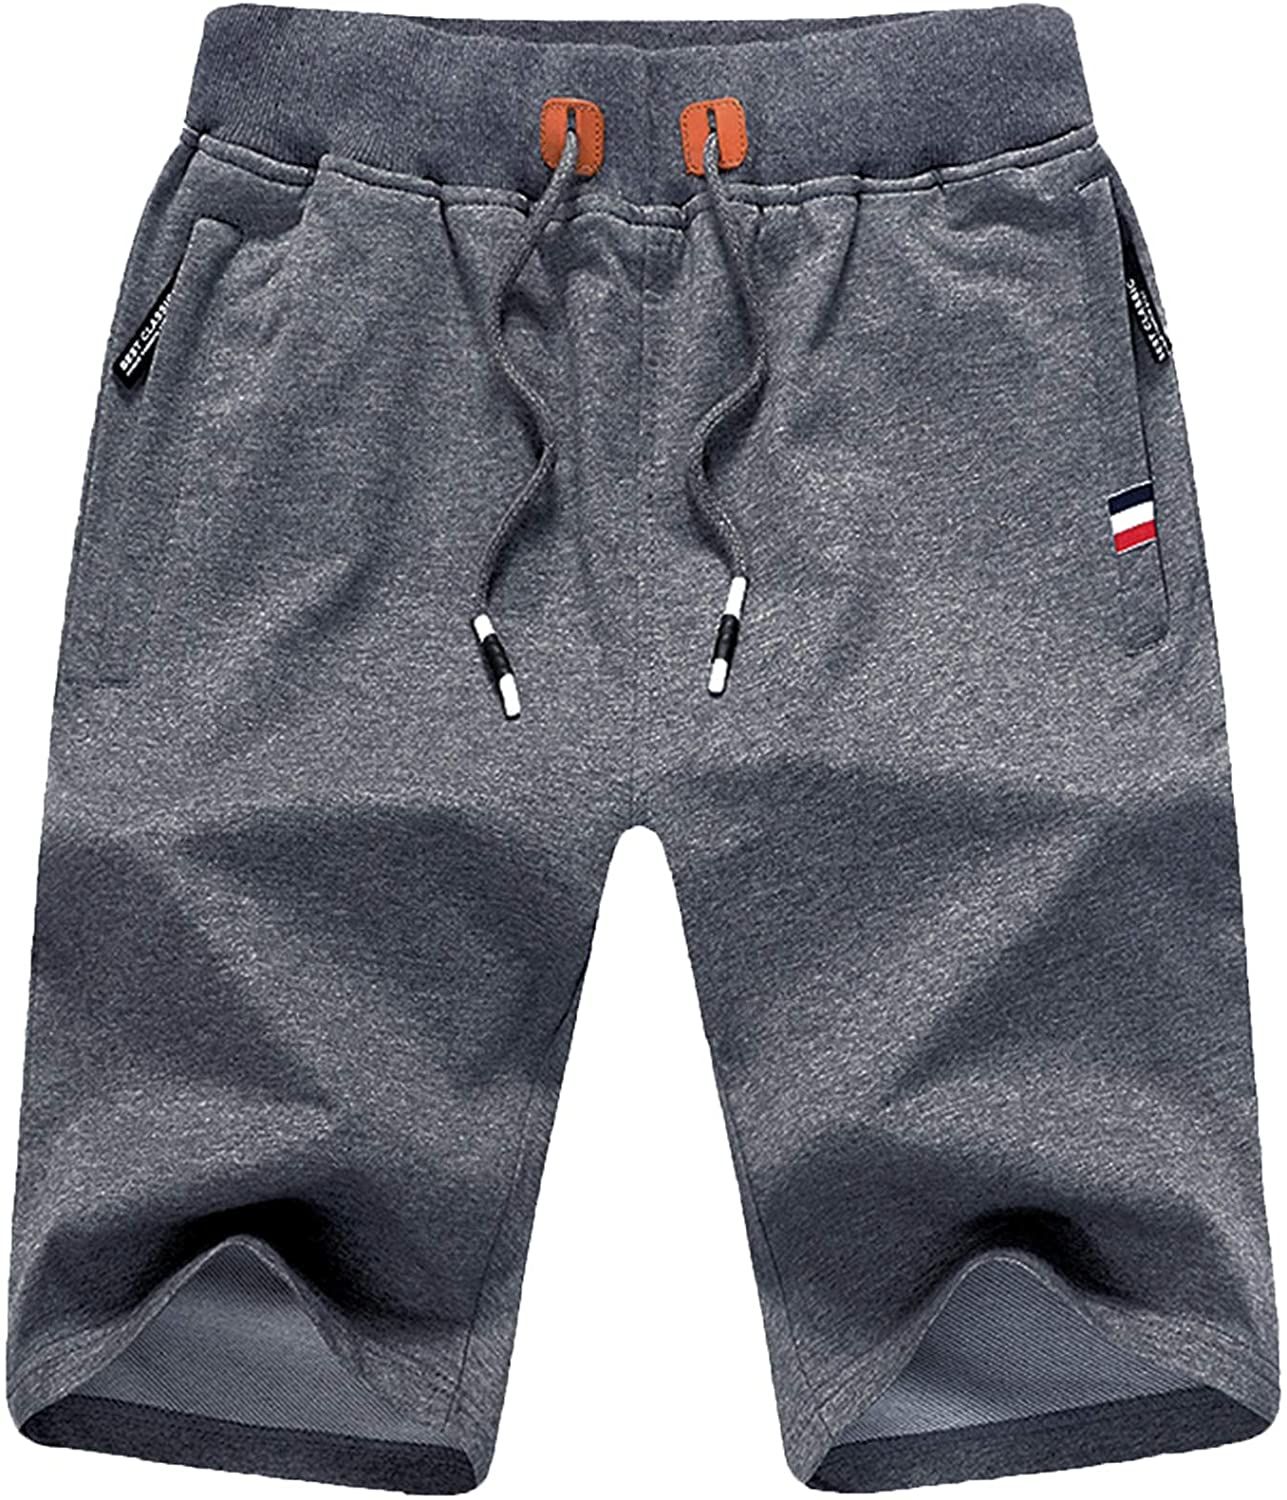 ZOXOZ Mens Summer Casual Sports Shorts with Zip Pockets 